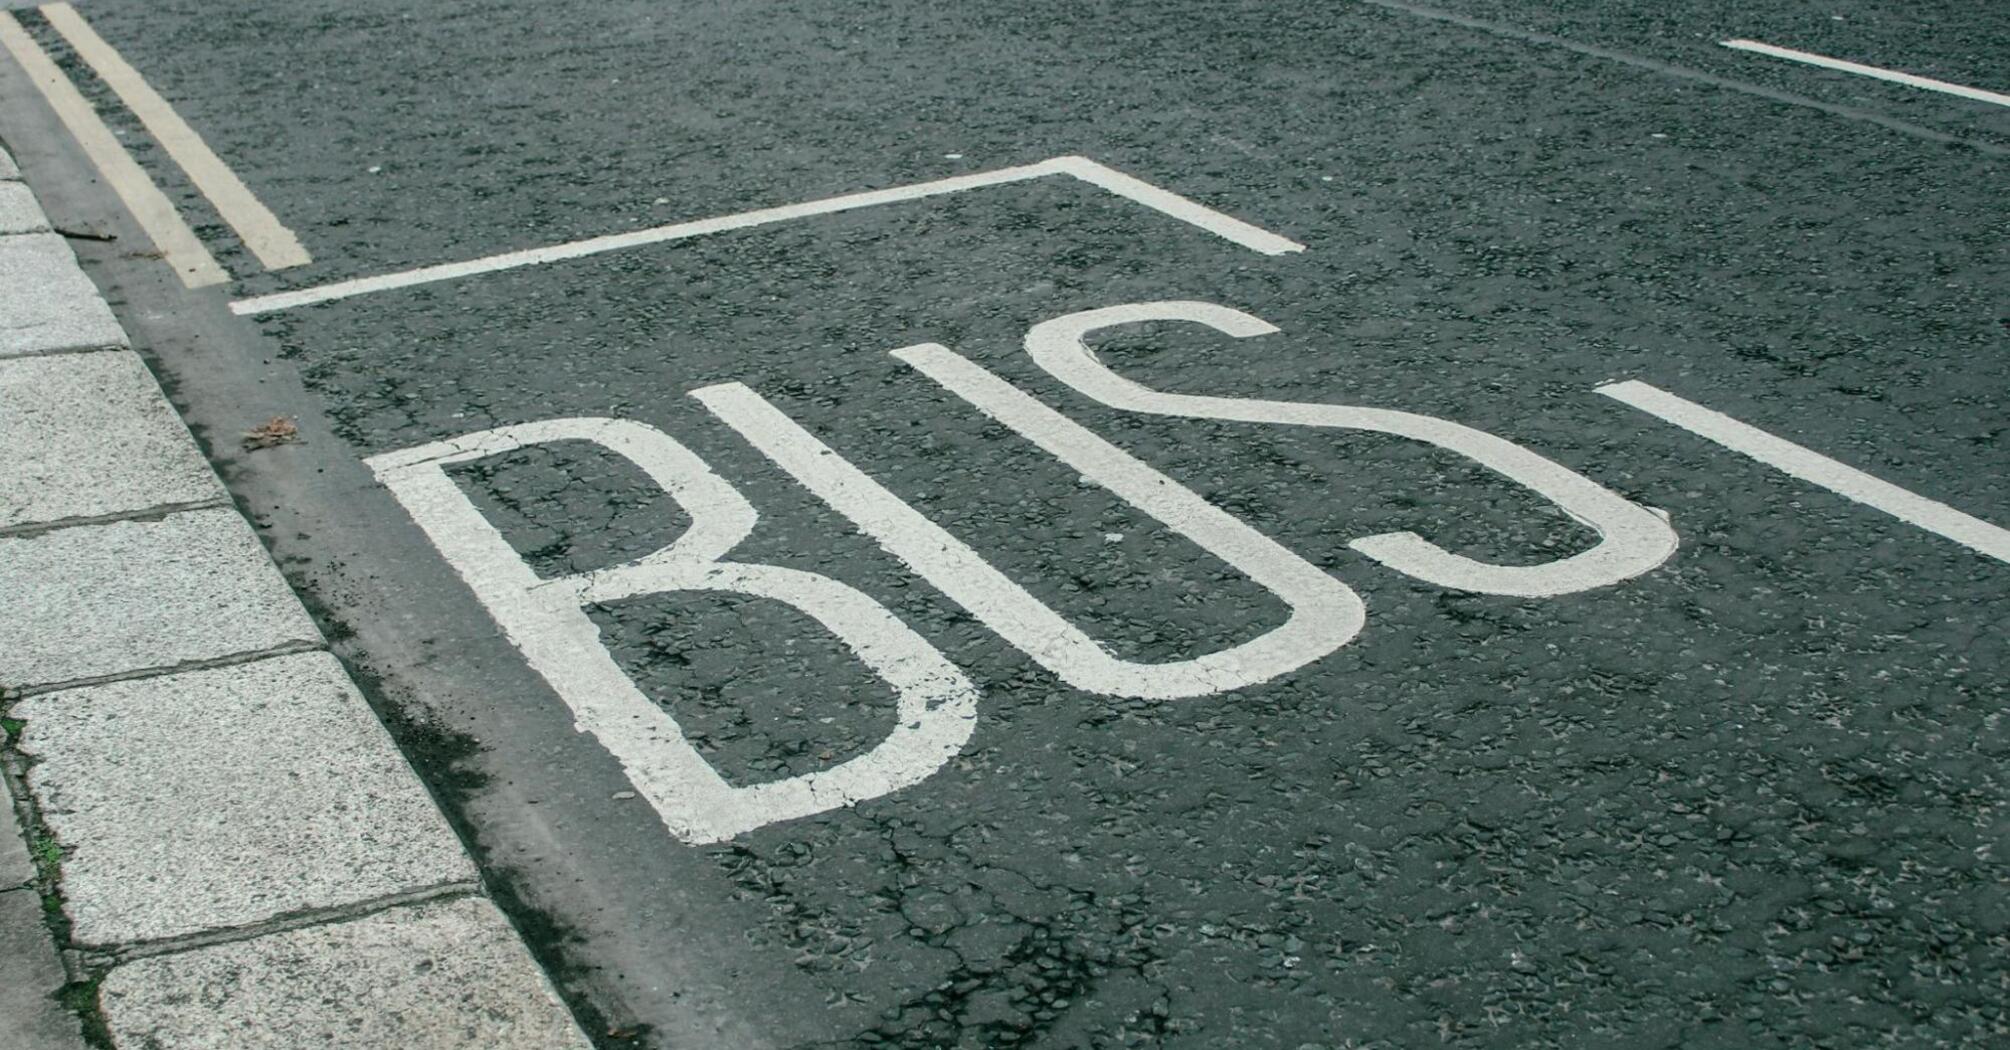 Bus lane markings on a city road